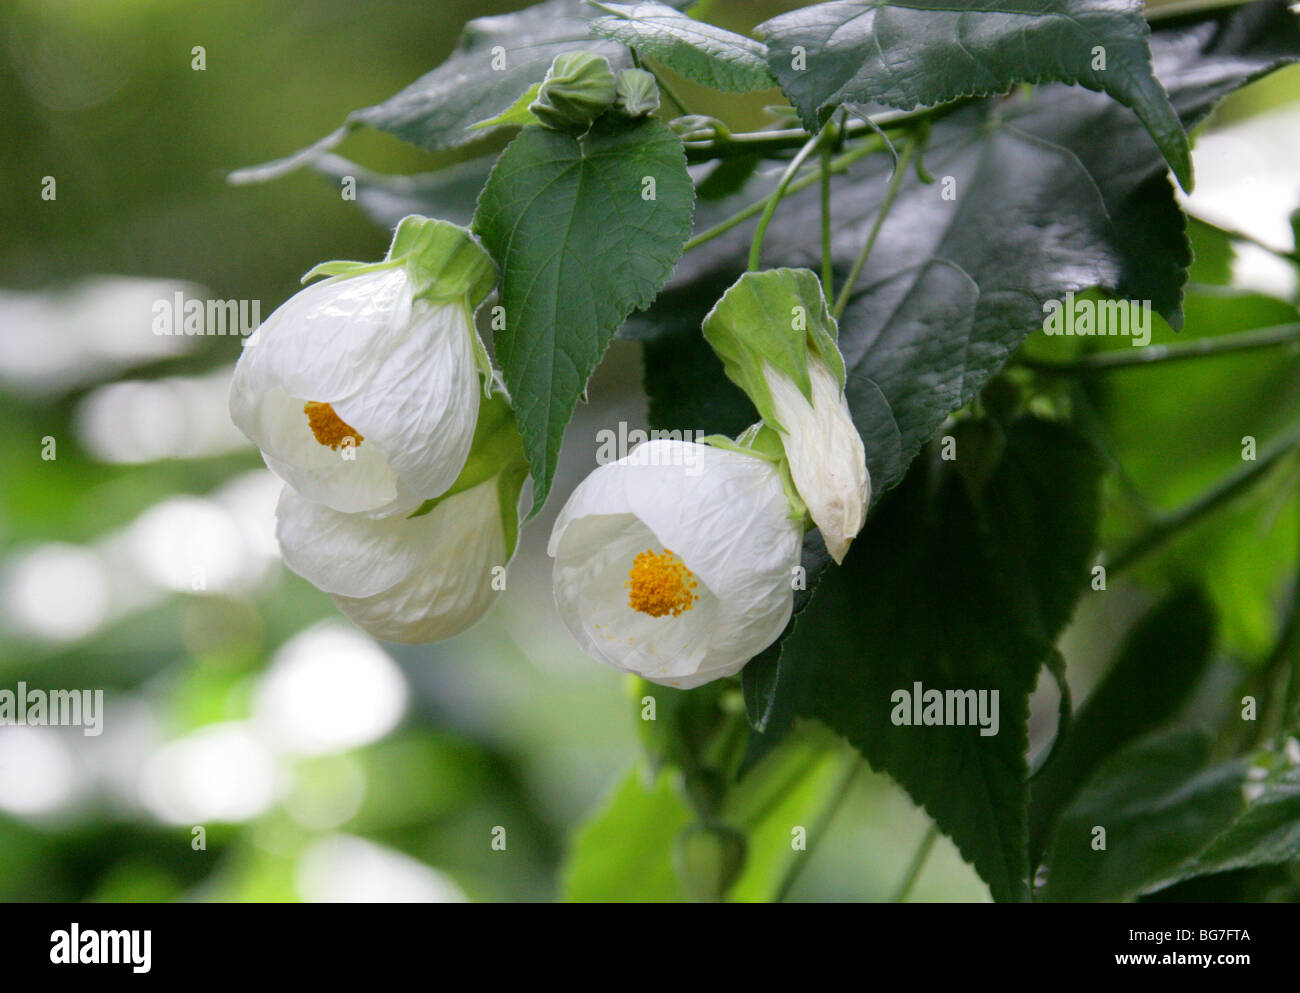 Abutilon, Chinese Bell Flower, Chinese Lantern, Mallow or Indian Mallow, Abutilon 'Boule de Neige', Malvaceae. China, Asia Stock Photo